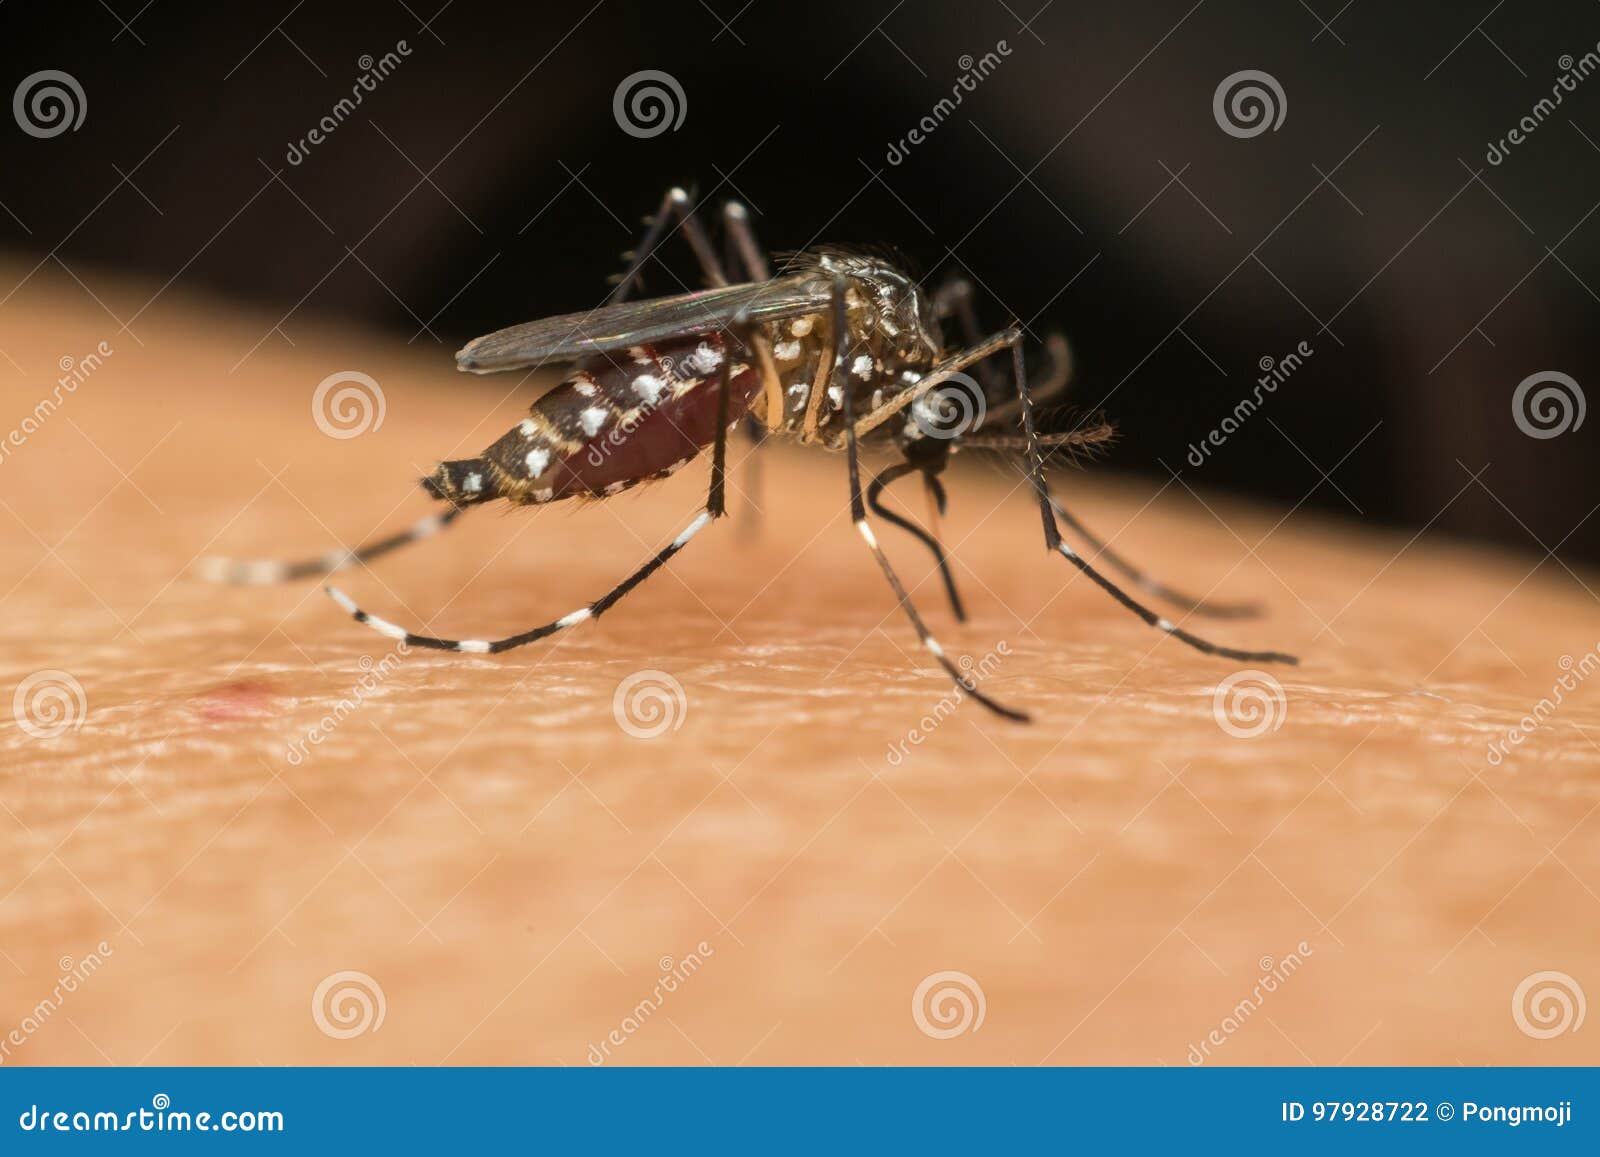 macro of mosquito (aedes aegypti) sucking blood